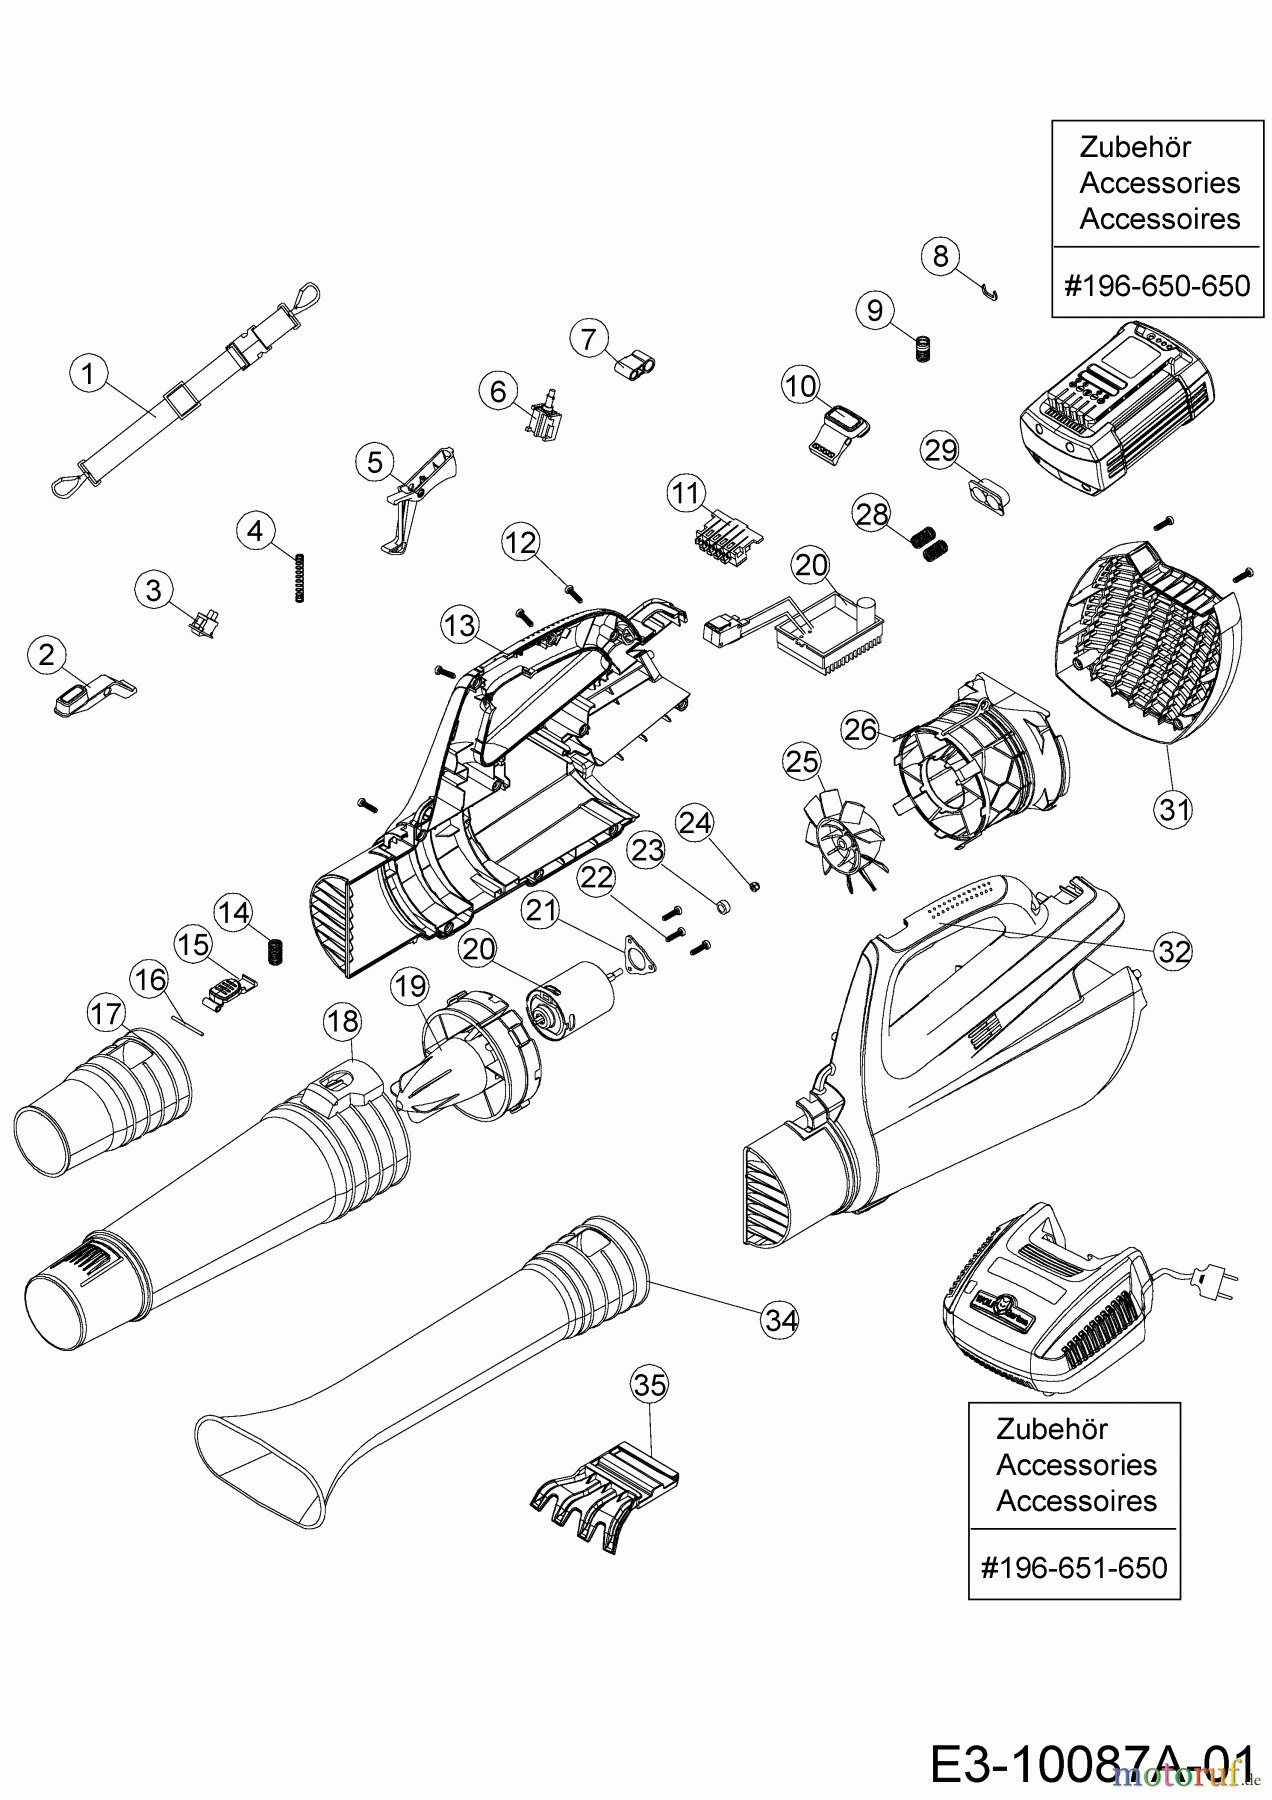  Wolf-Garten battery leaf blower 72V Li-Ion Power 24 B 41AA0BO-650  (2019) Basic machine